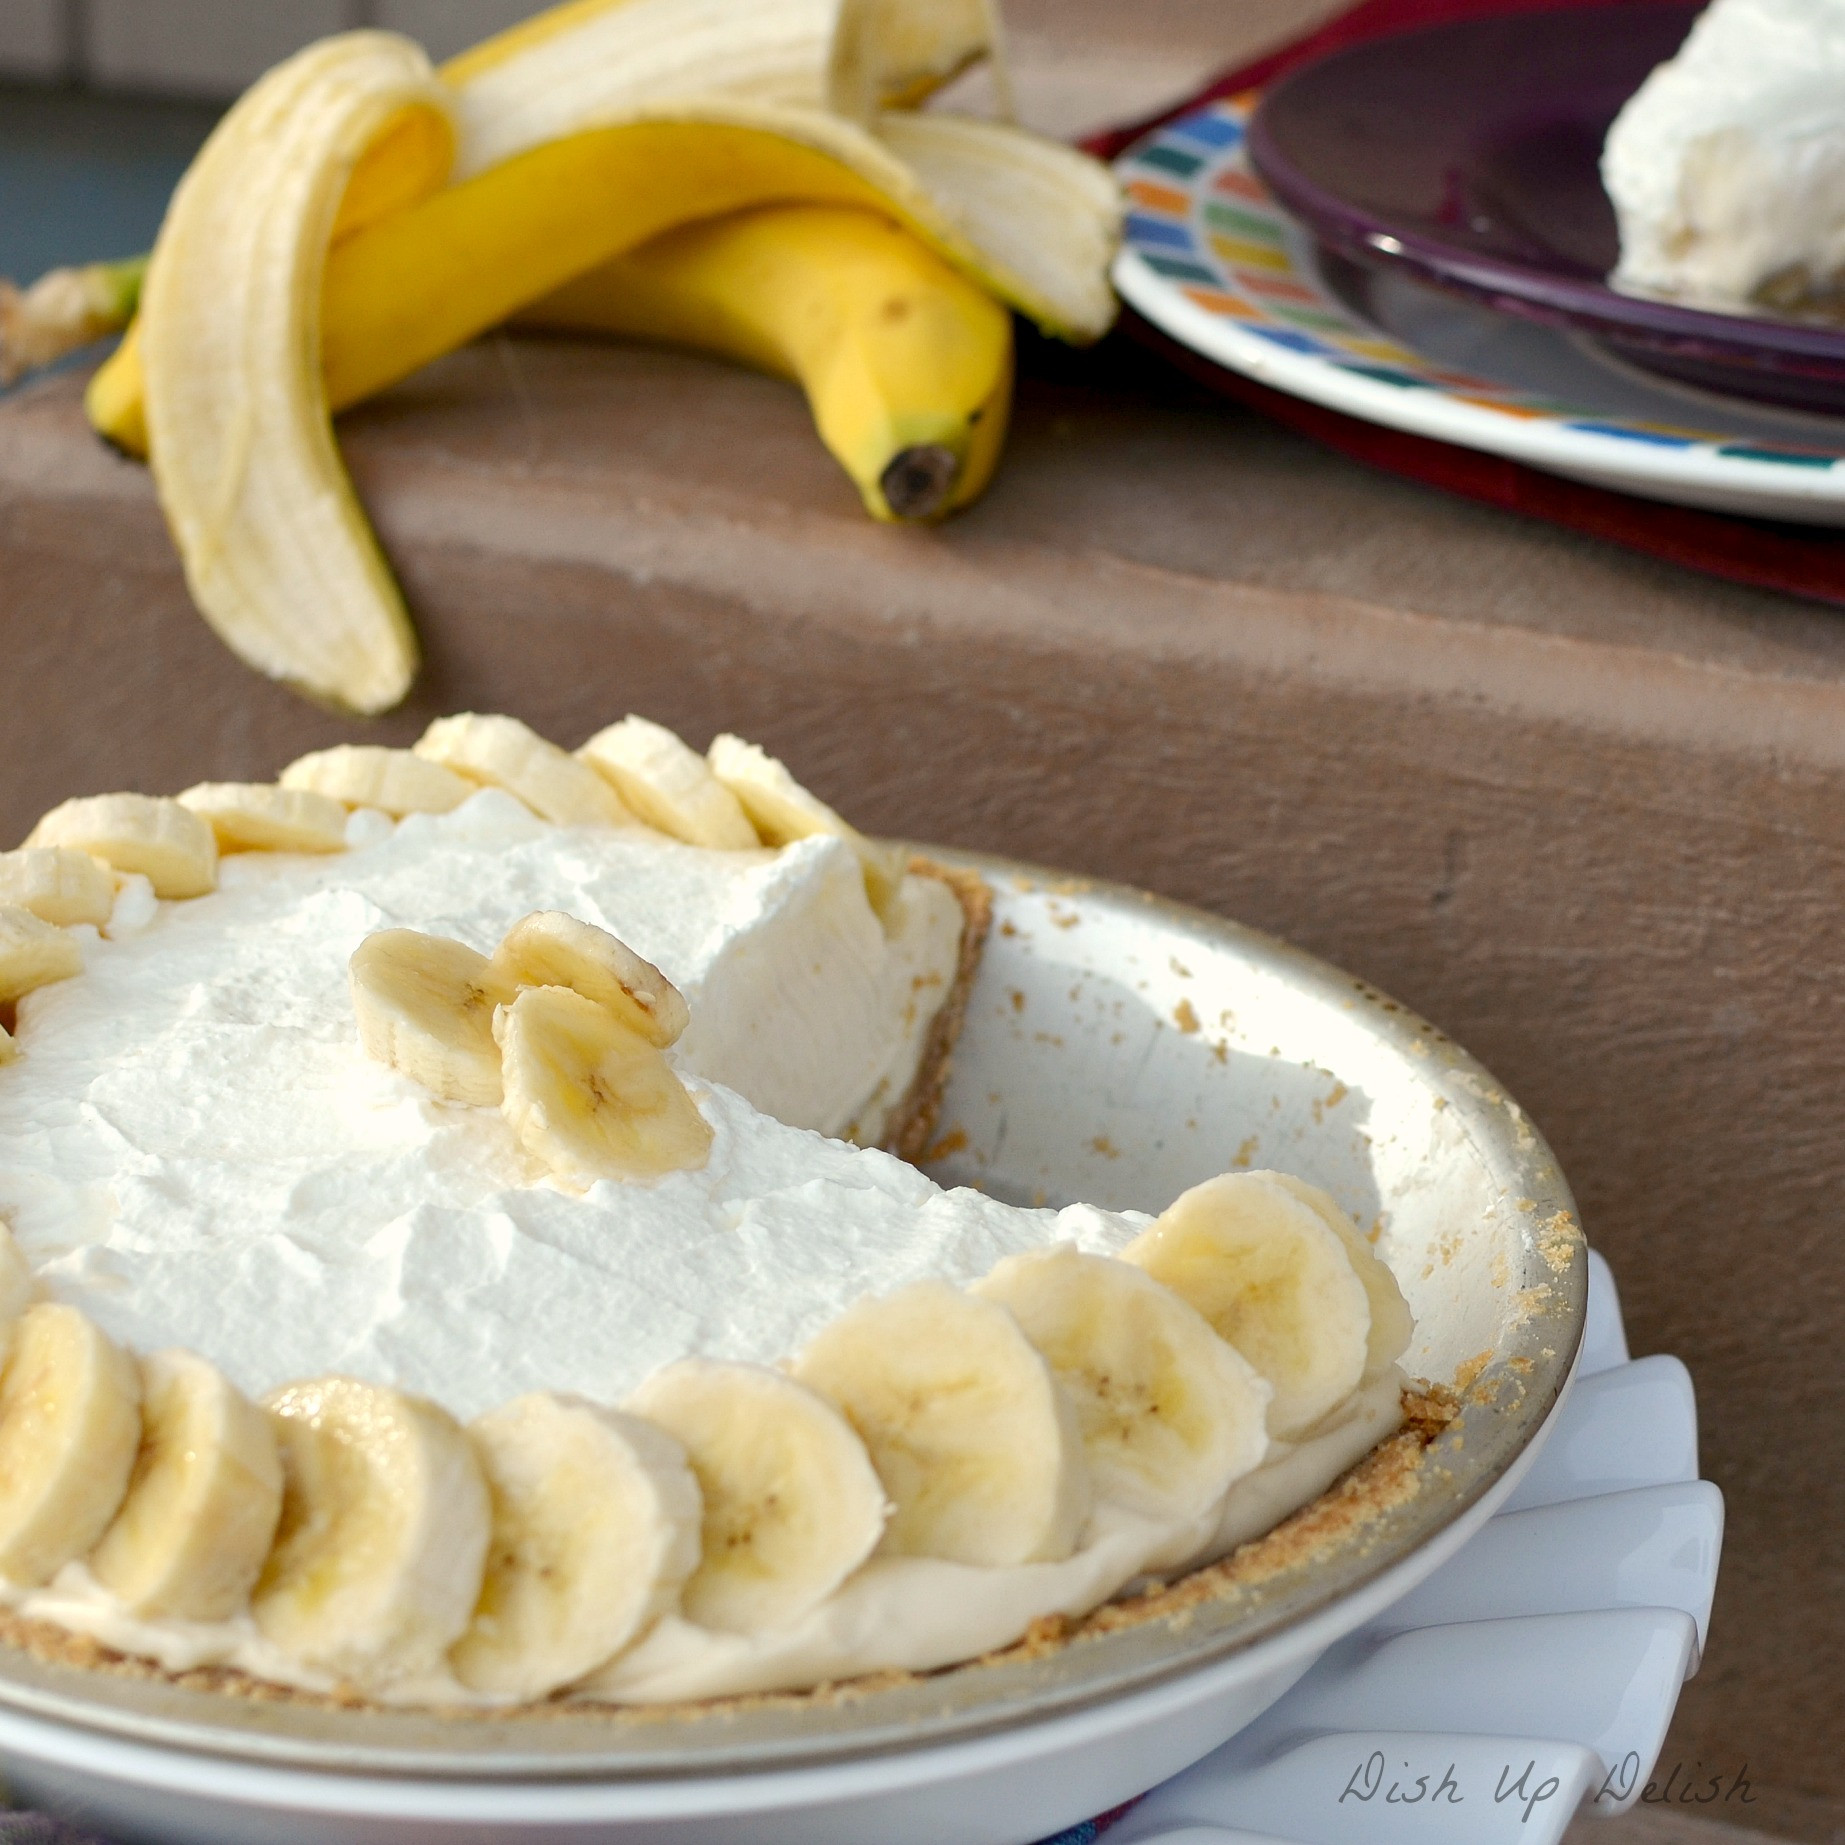 Banana Cream Pie From Scratch
 From scratch Banana Cream Pie